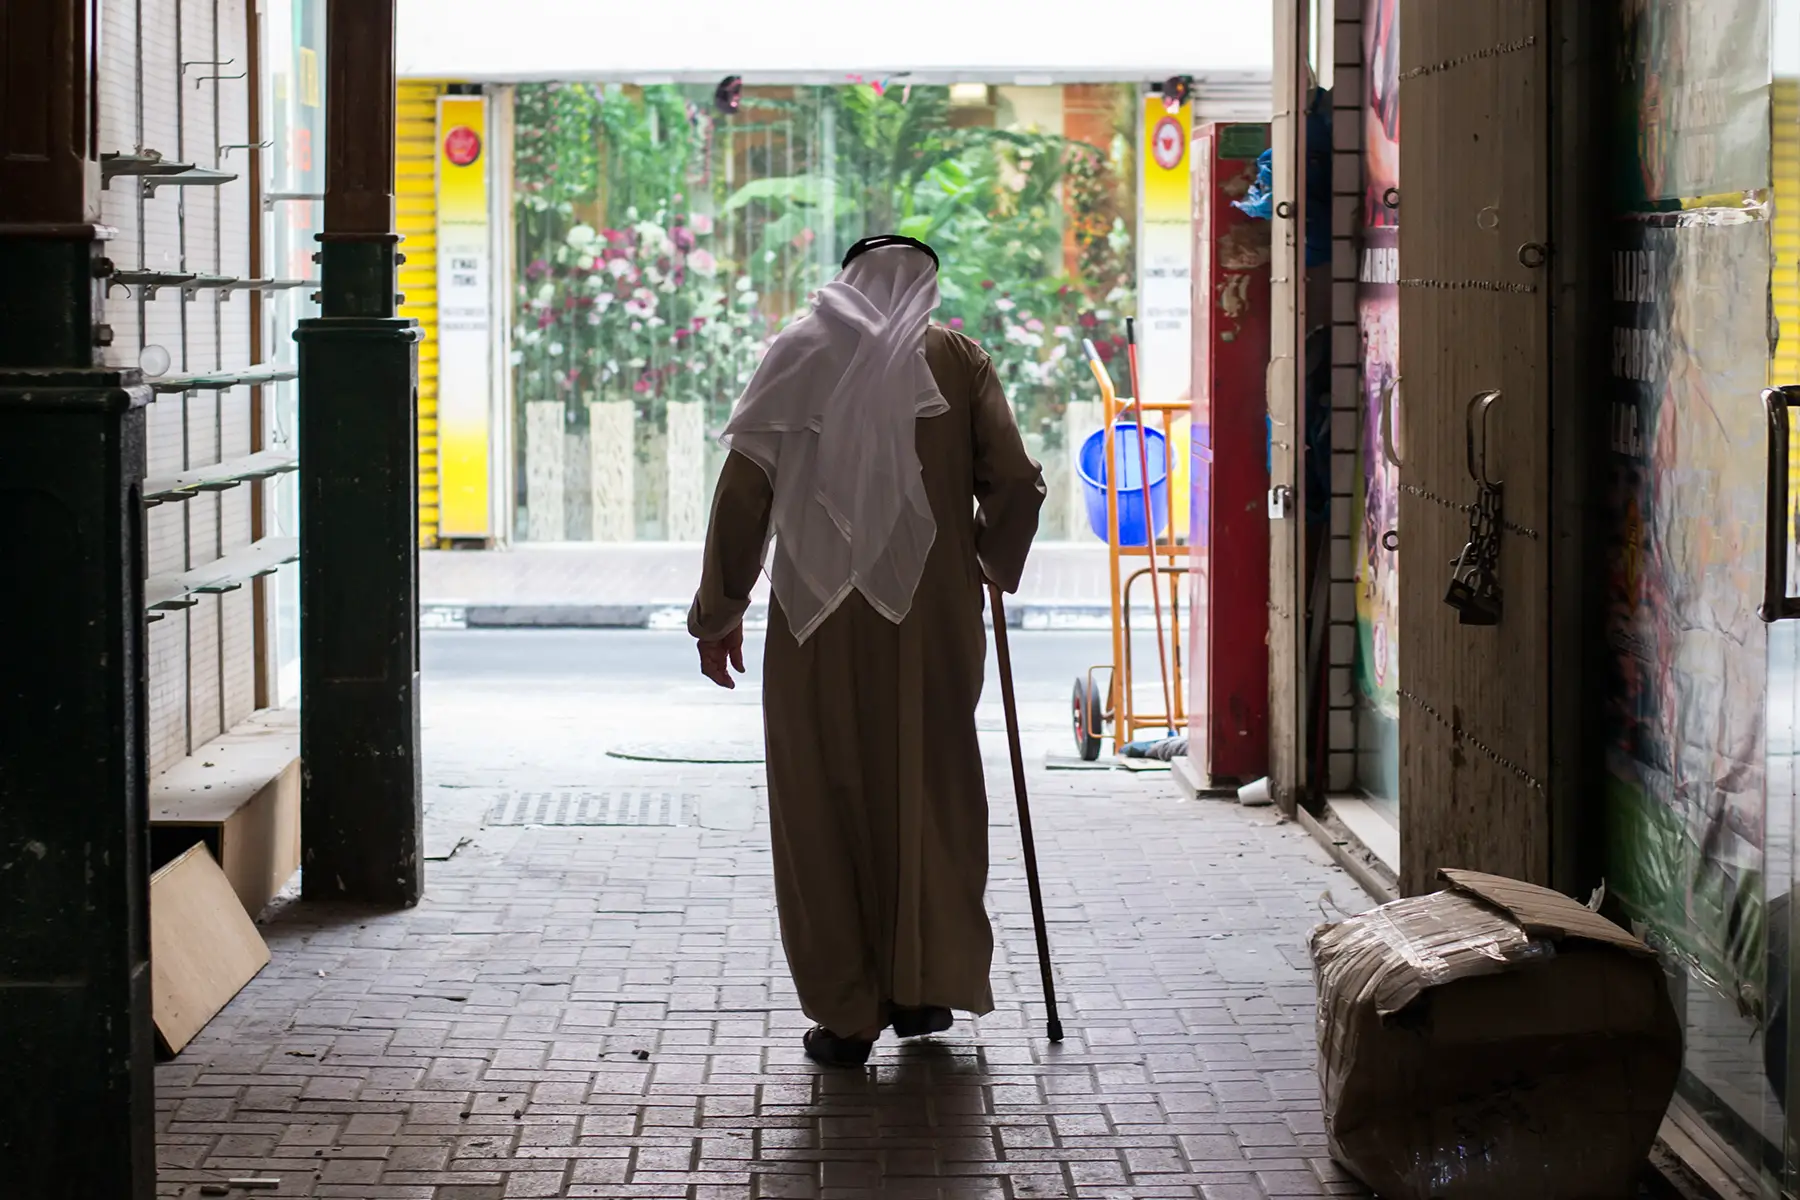 An elderly man walking through a souk in Dubai, UAE